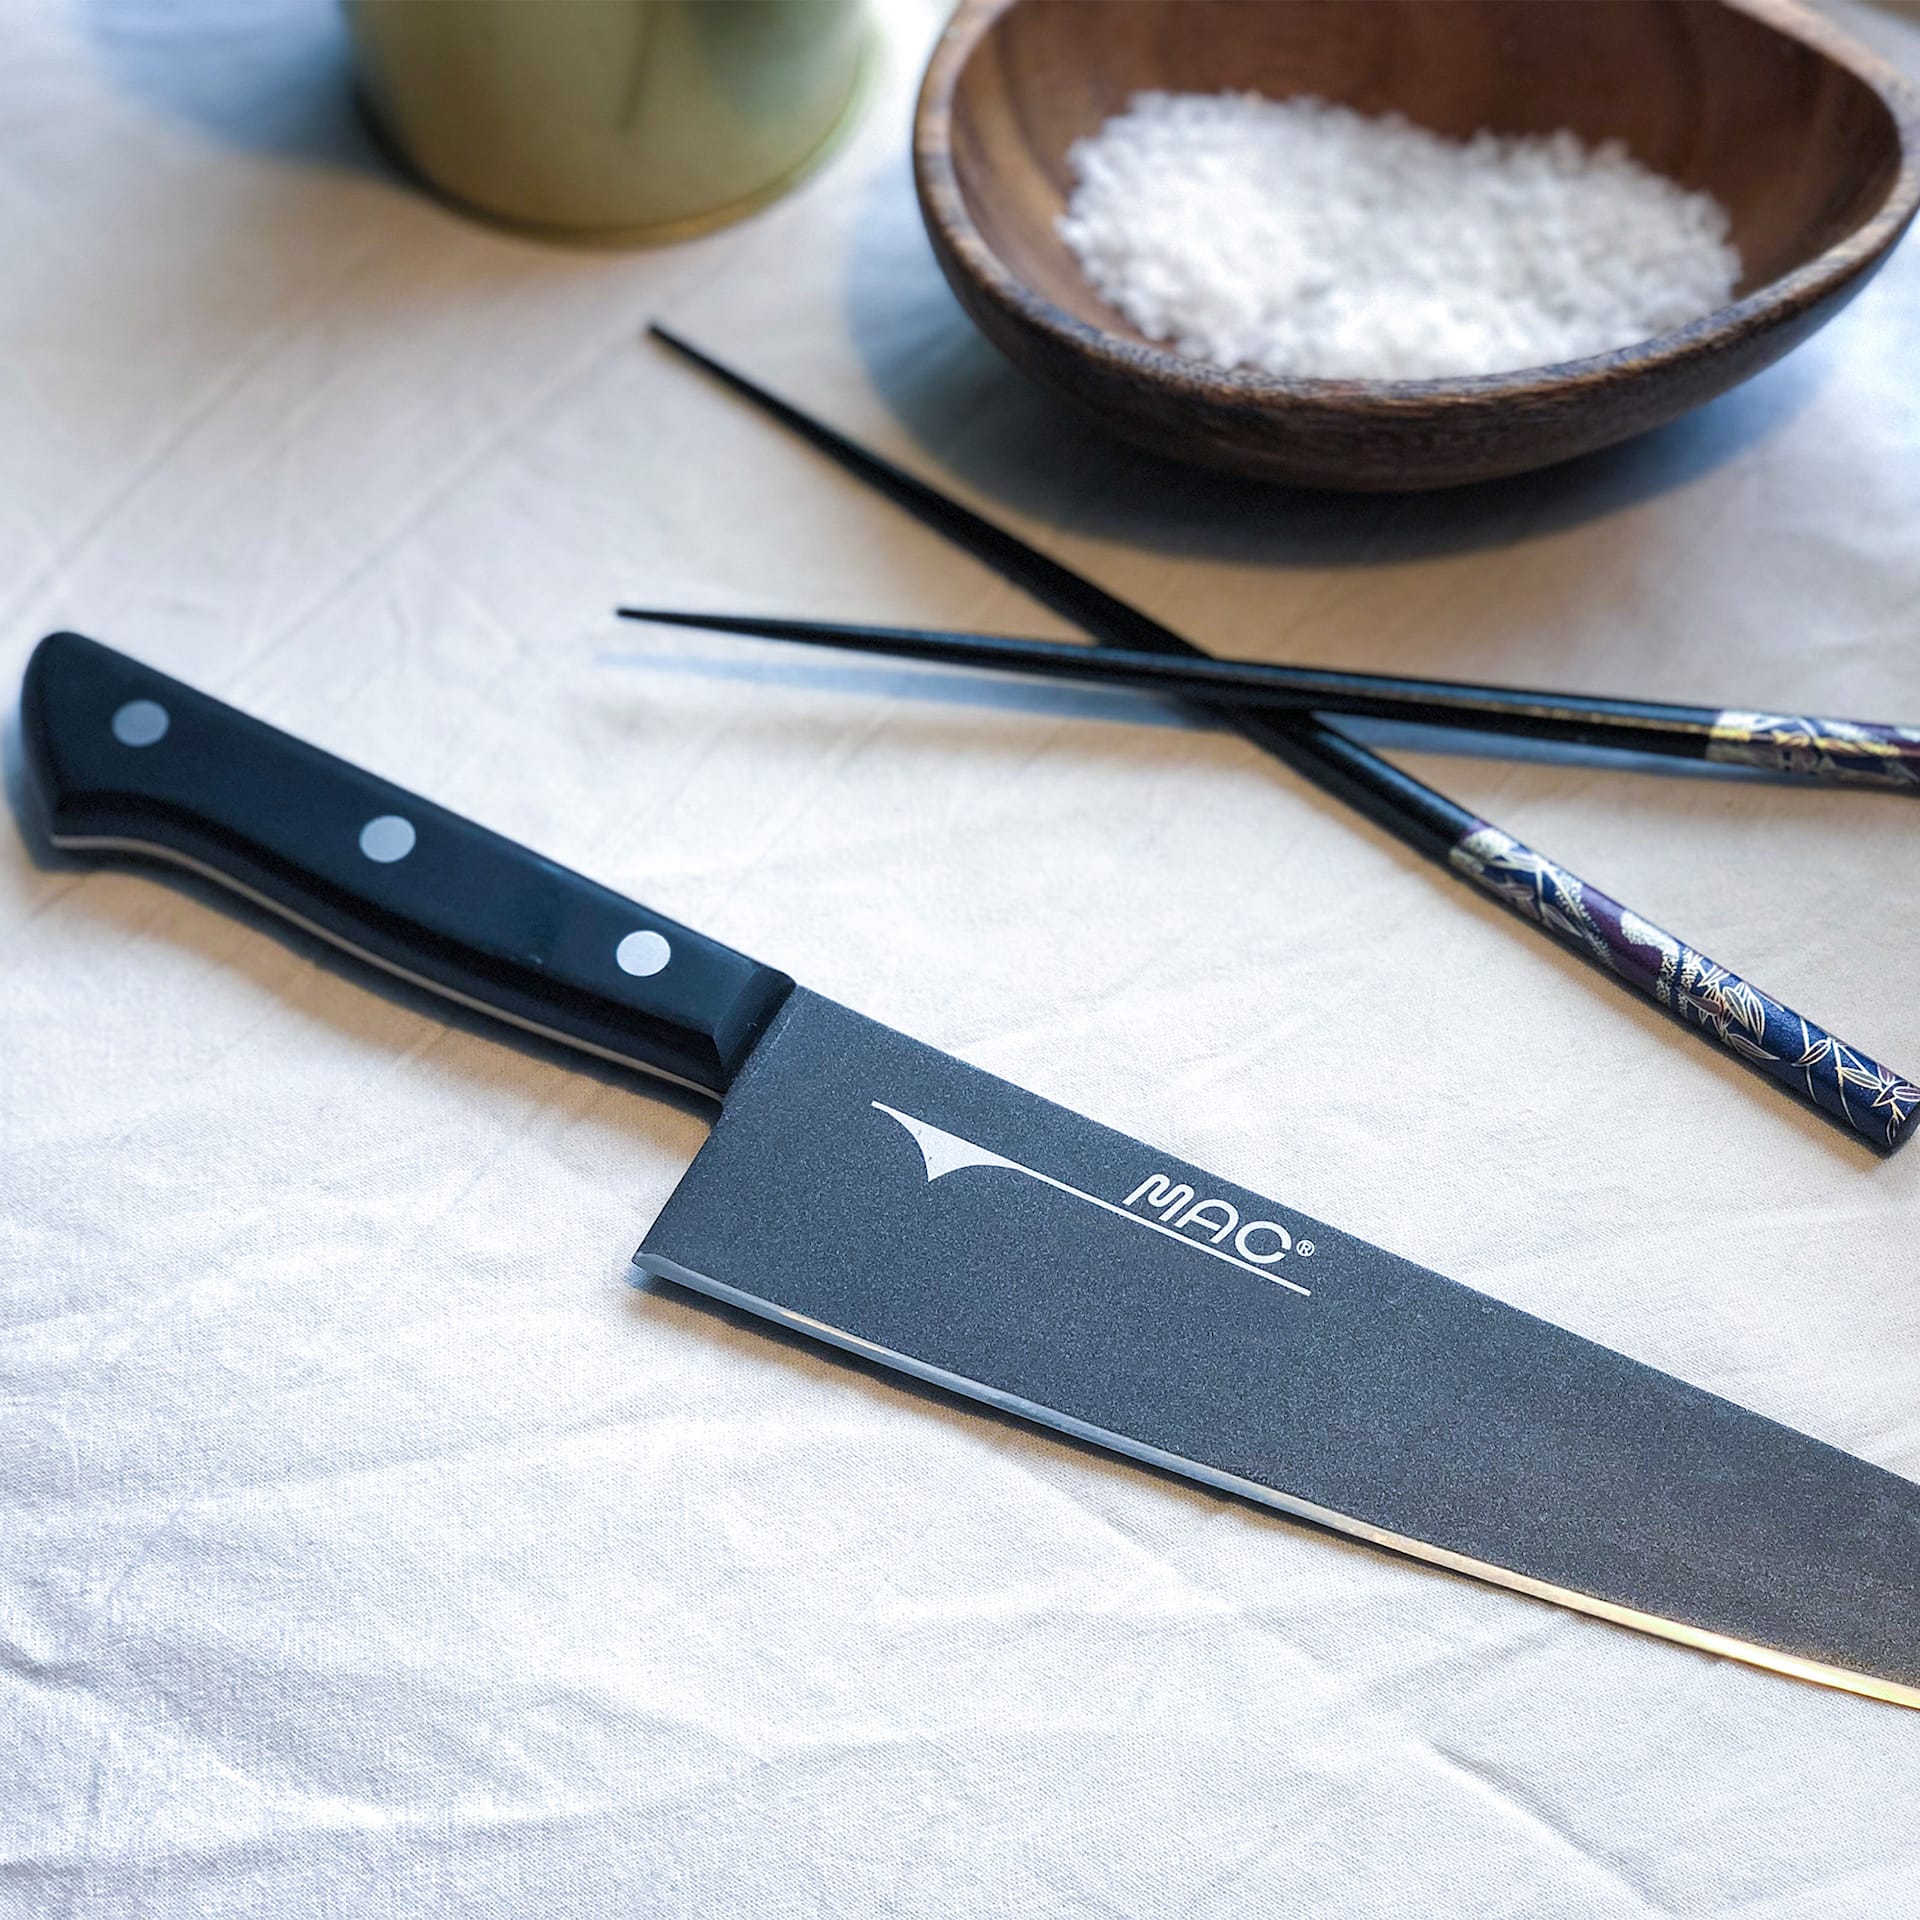 Chef - Sushi/Chef's knife 21.5 cm - MAC - NO GA